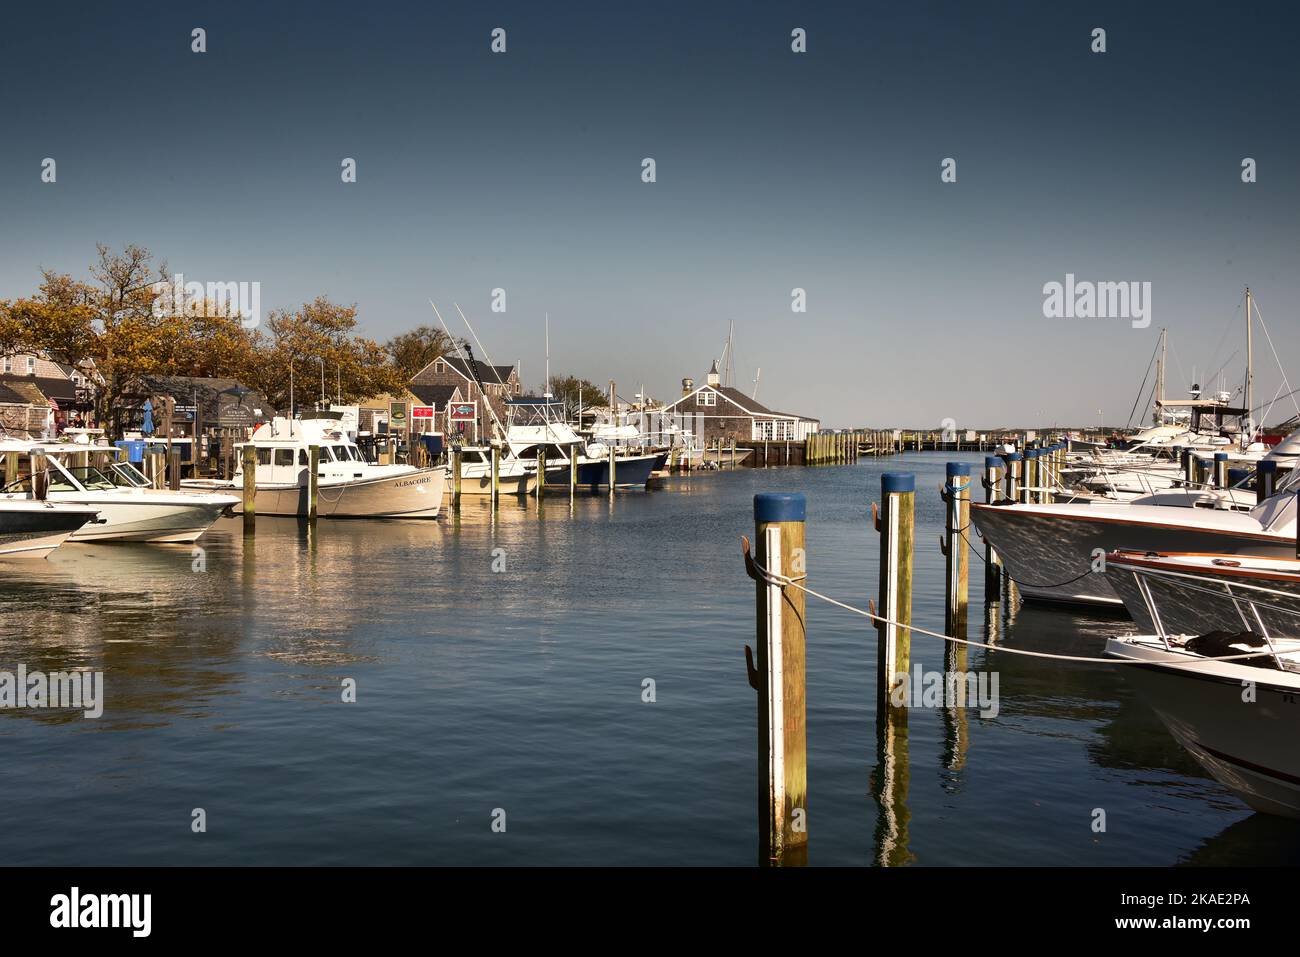 Isla de bacalao fotografías e imágenes de alta resolución - Alamy